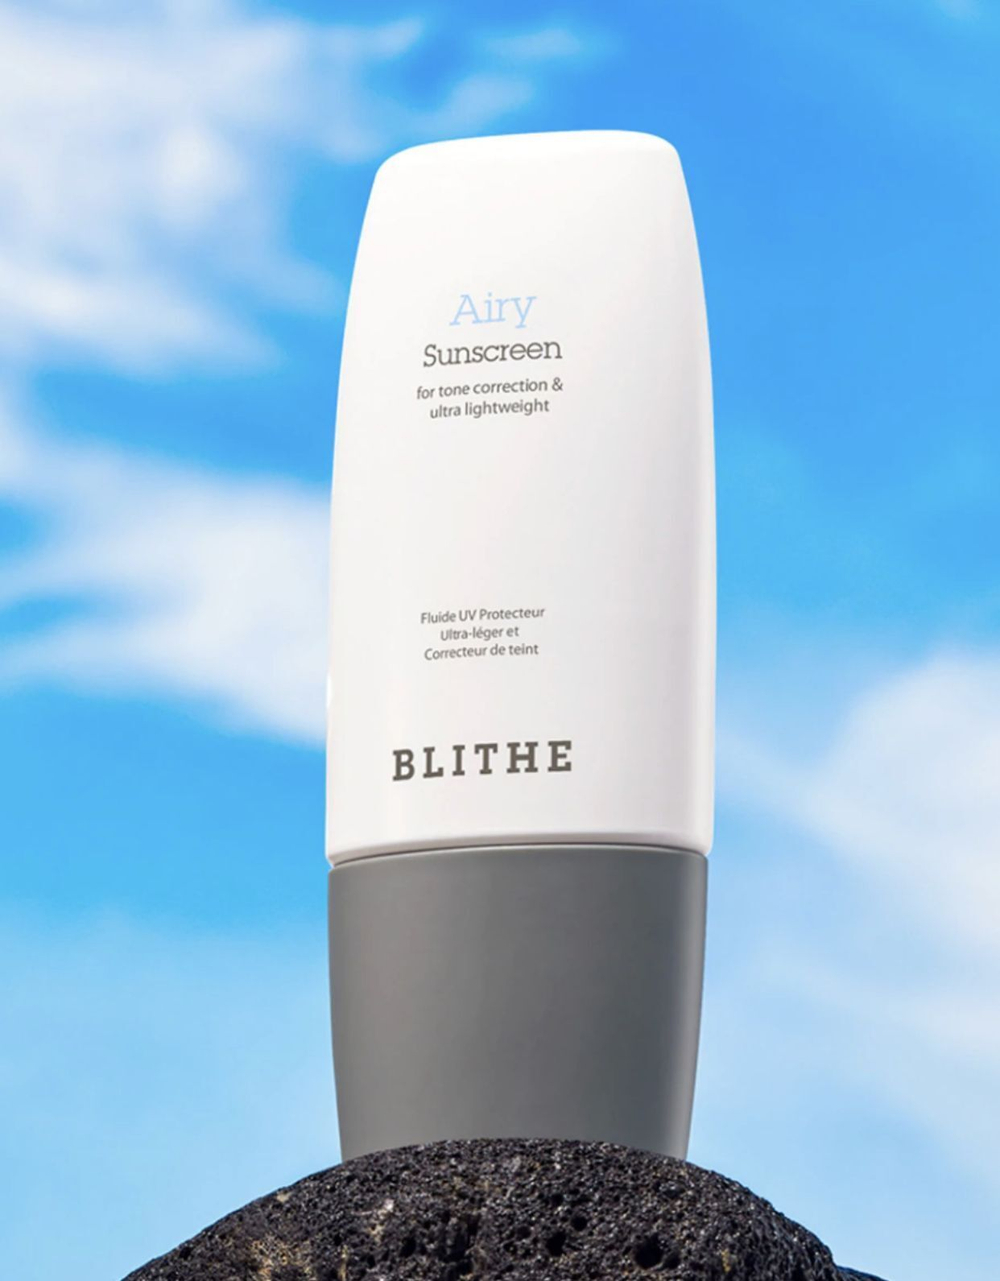 Blithe Солнцезащитный крем Airy Sunscreen SPF 50+ PA ++++ 50 мл